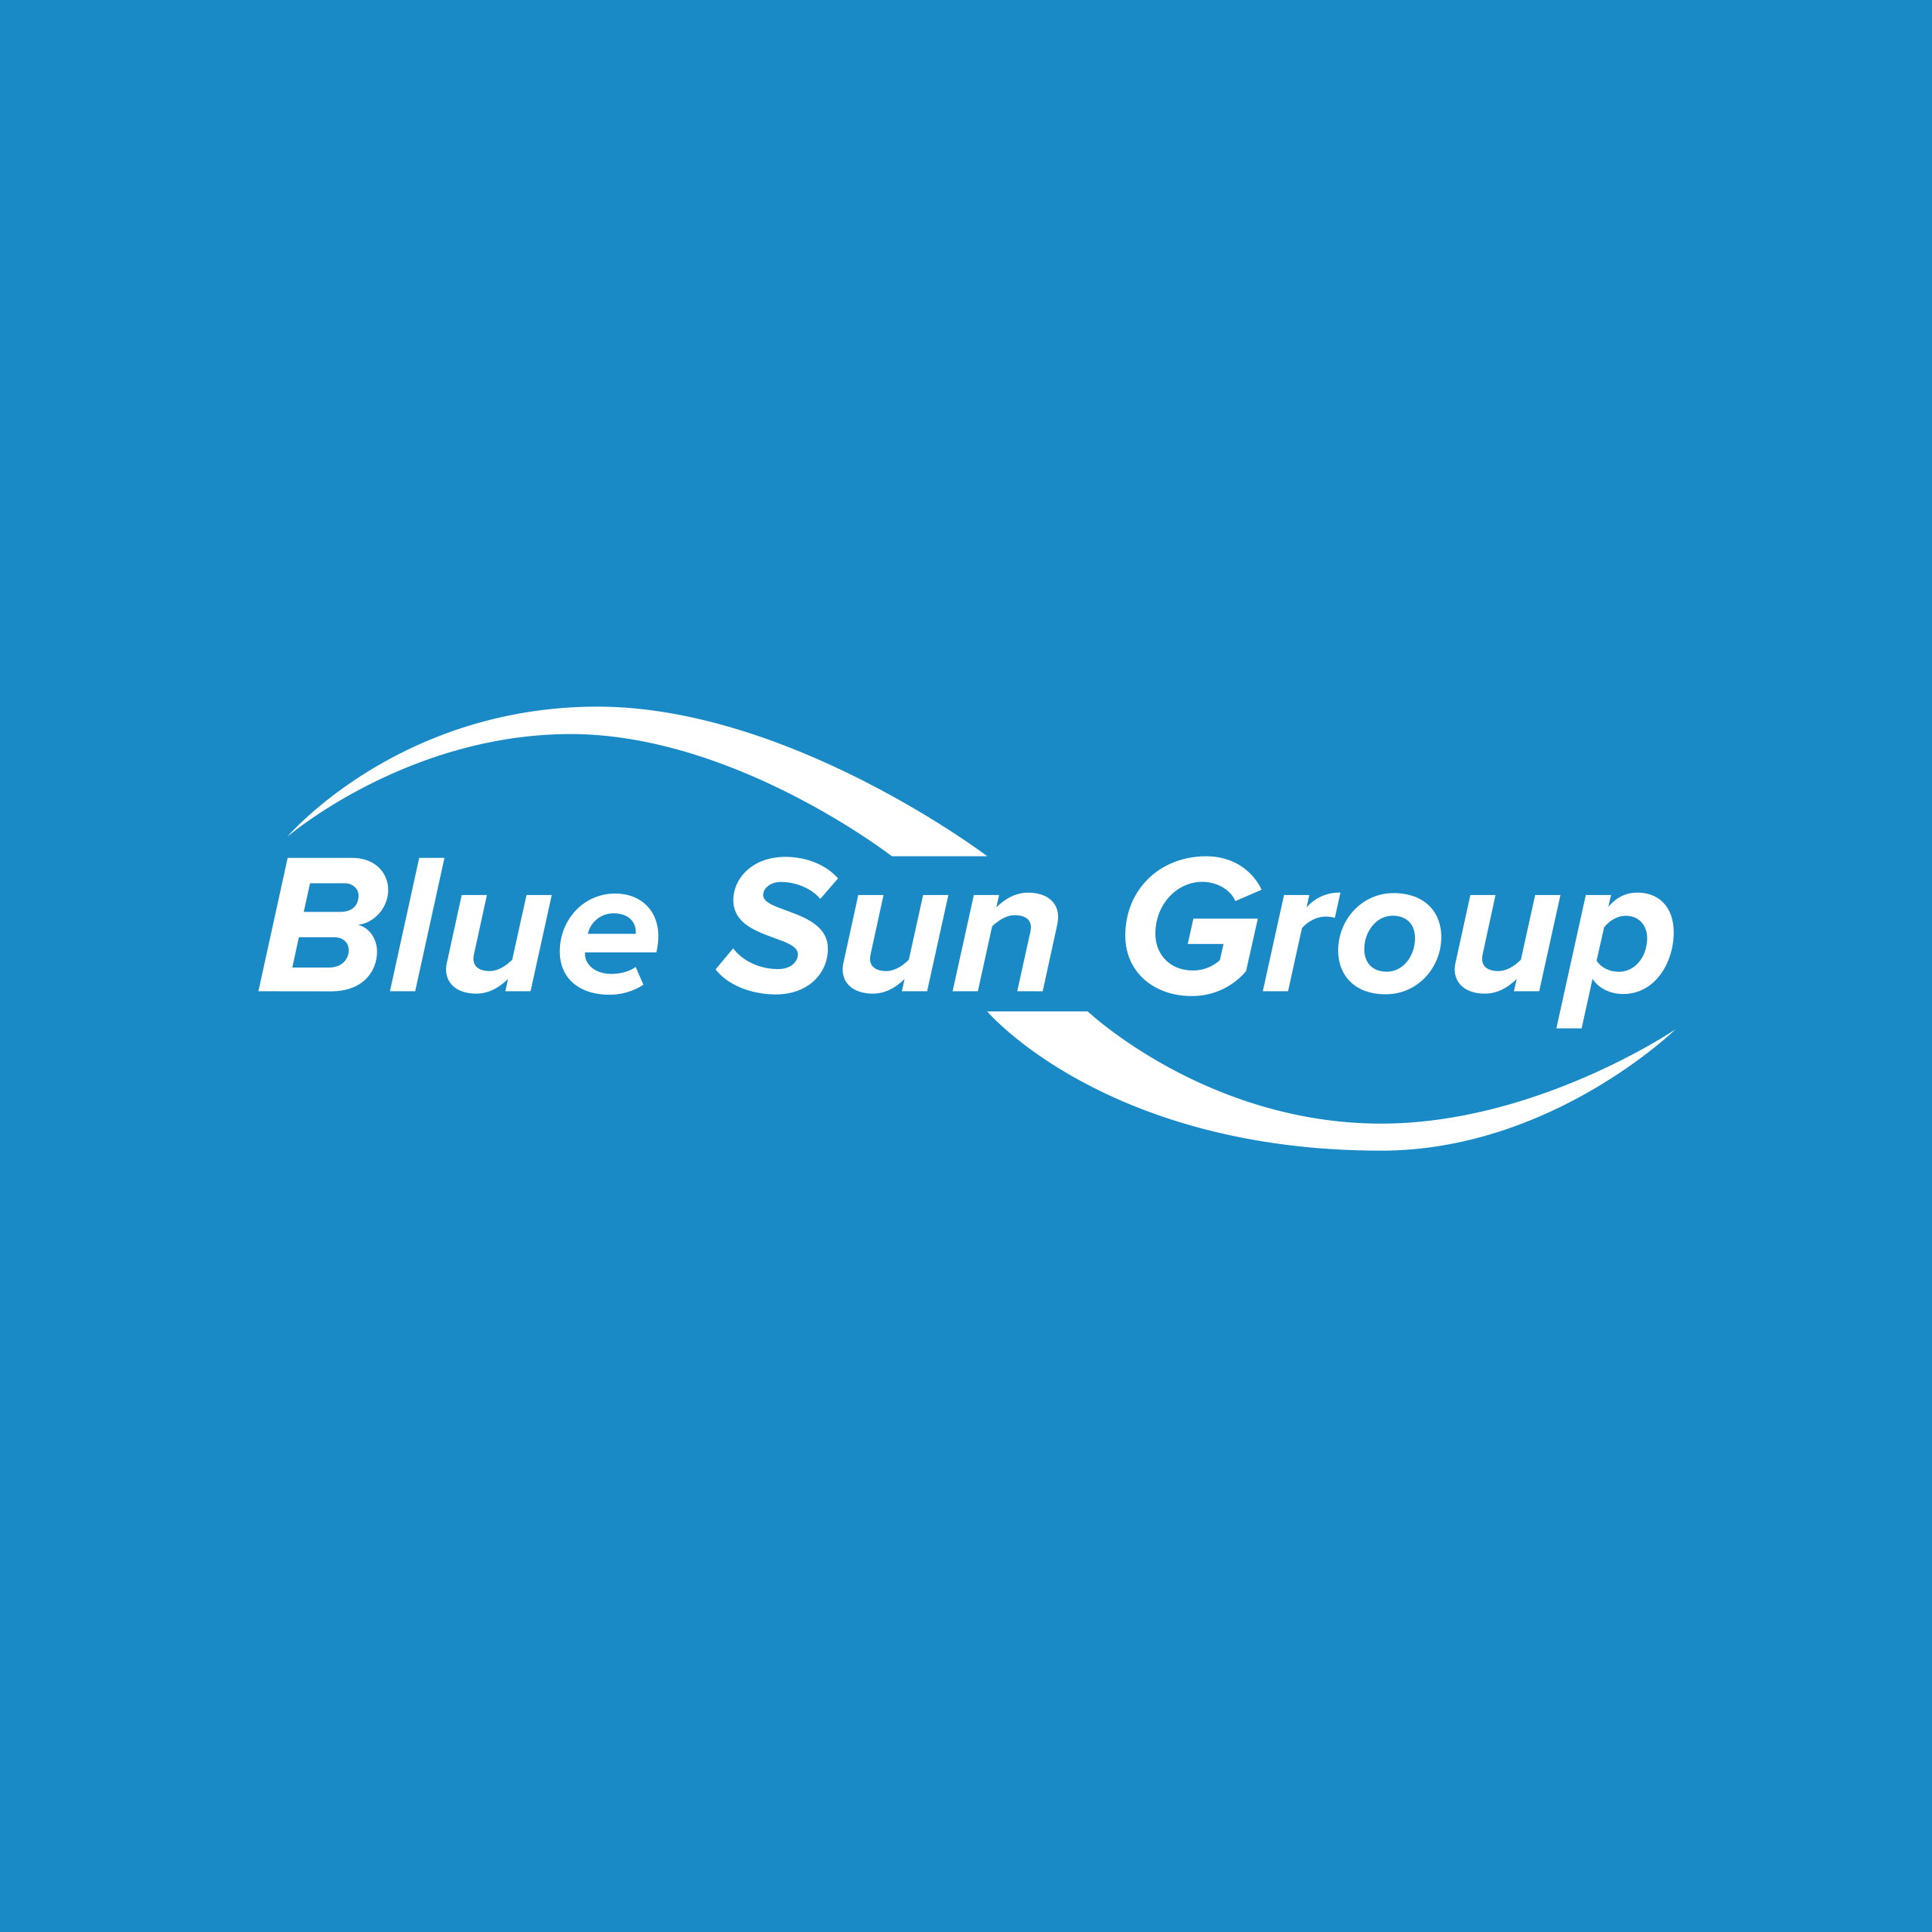 Blue Sun Logo - Queensland's Leading Distributor of Solar Systems - Blue Sun Group